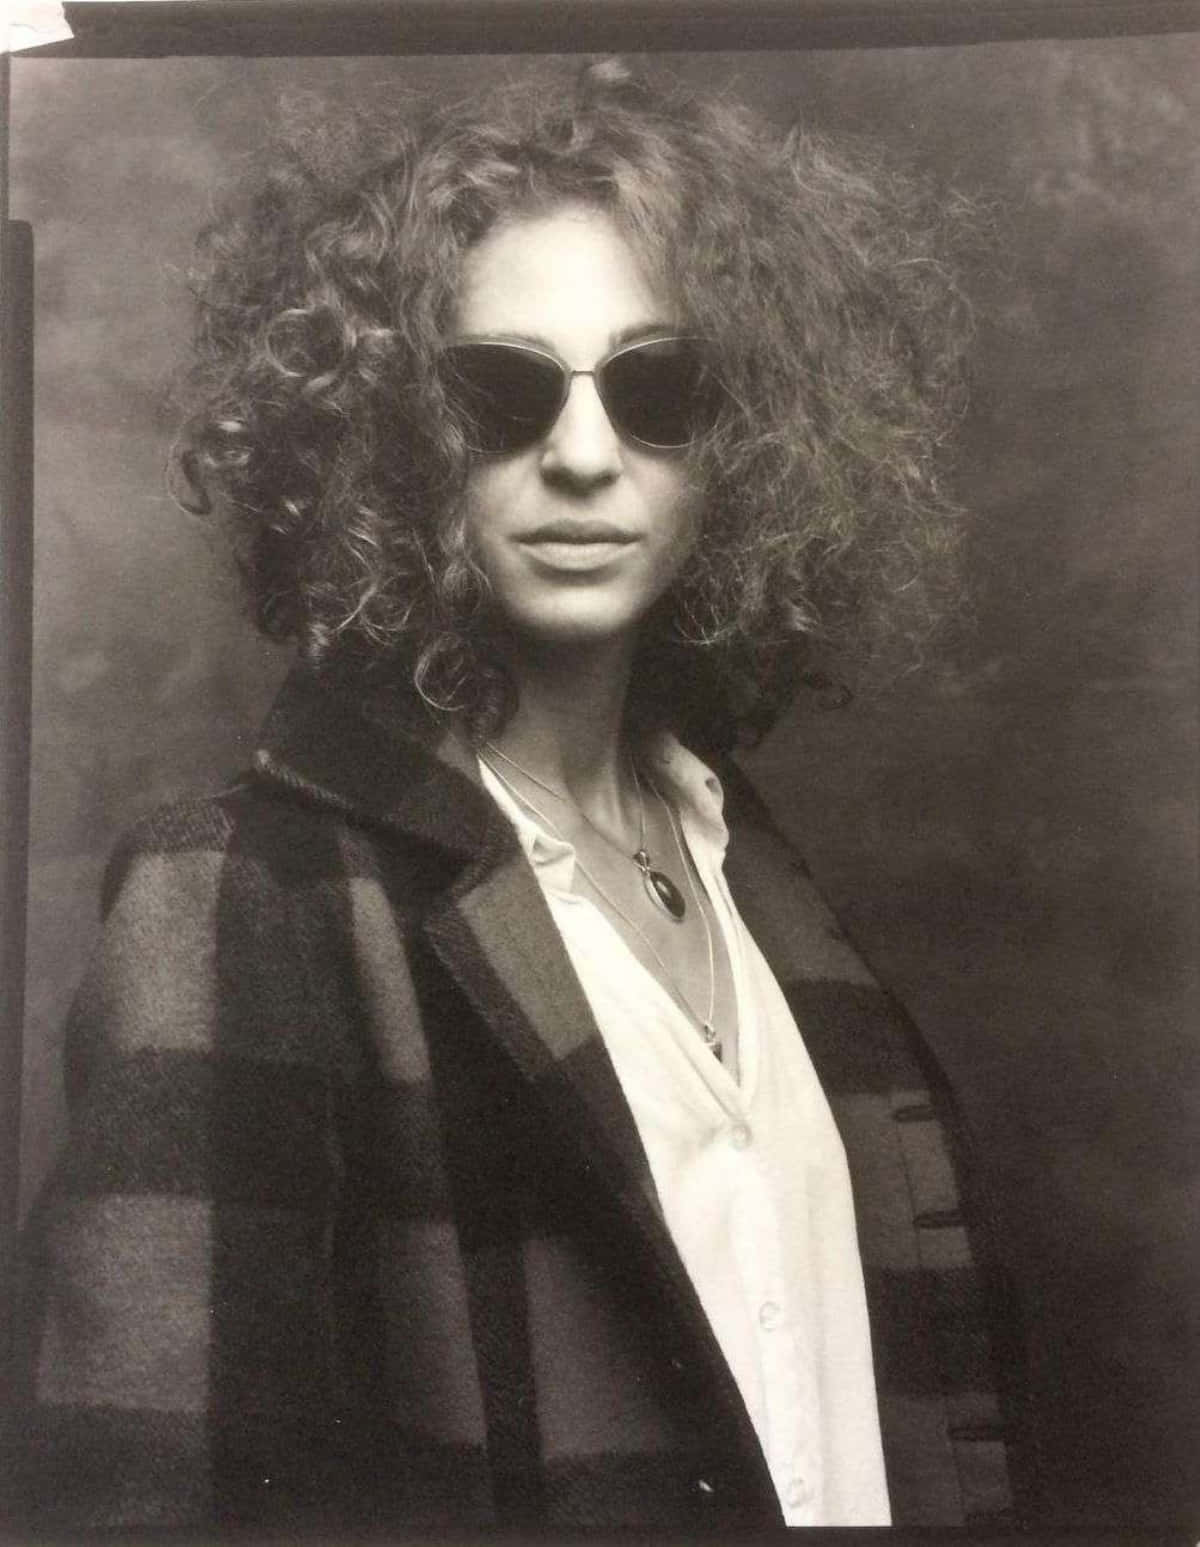 Retro Styled Portrait Woman Sunglasses Wallpaper